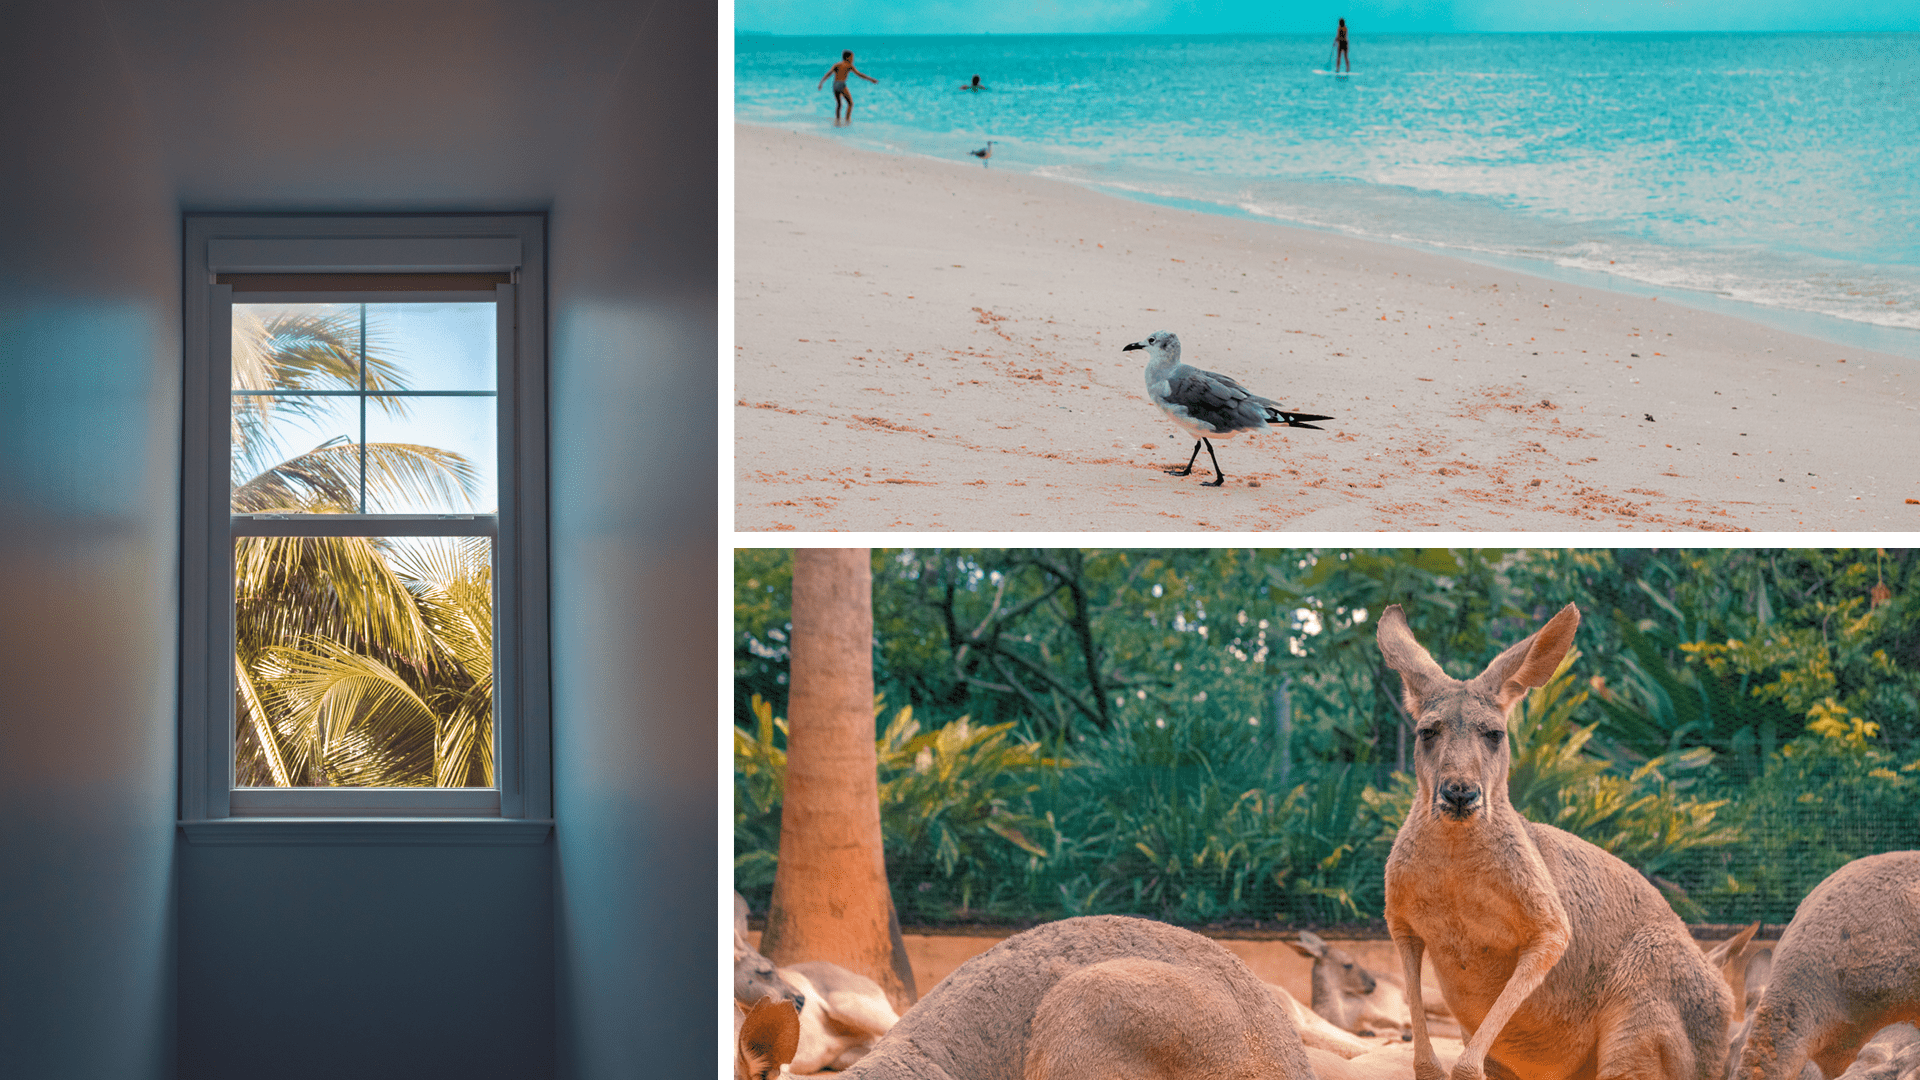 3 photographs from Florida, an open window, a seagull on a beach and a kangaroo.